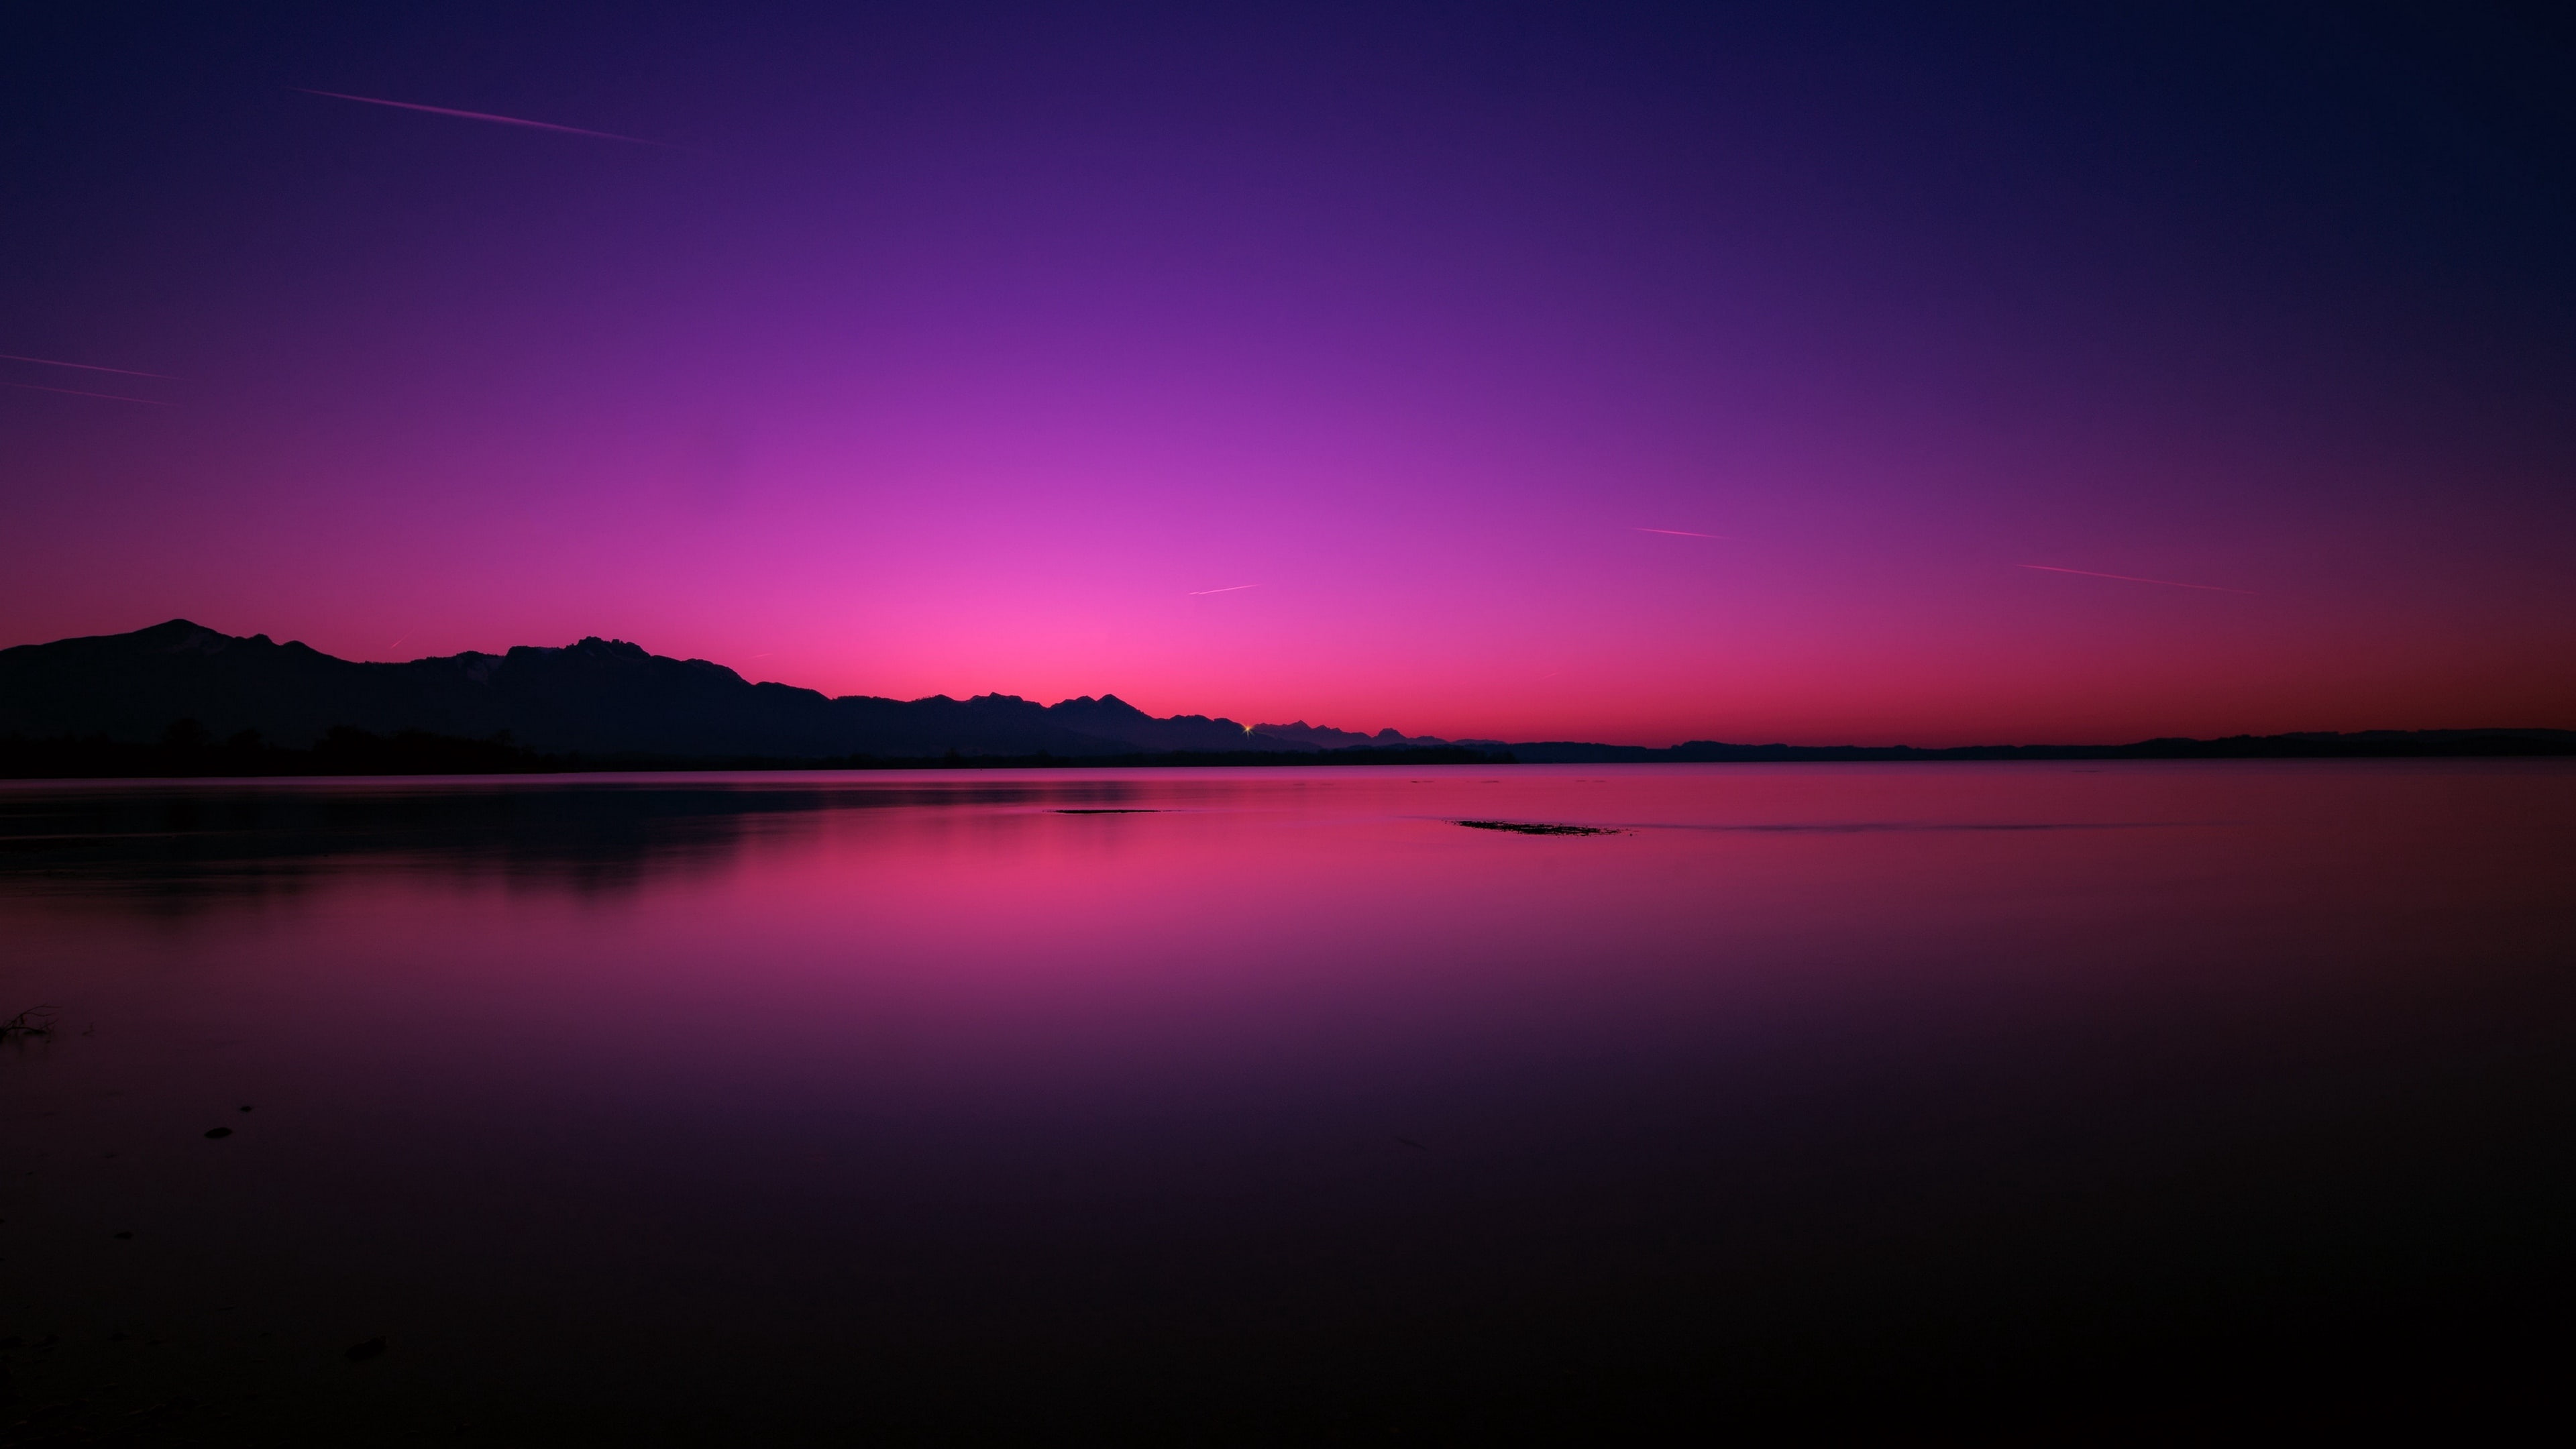 purple landscape, reflection, dusk, evening, pink sky, lake